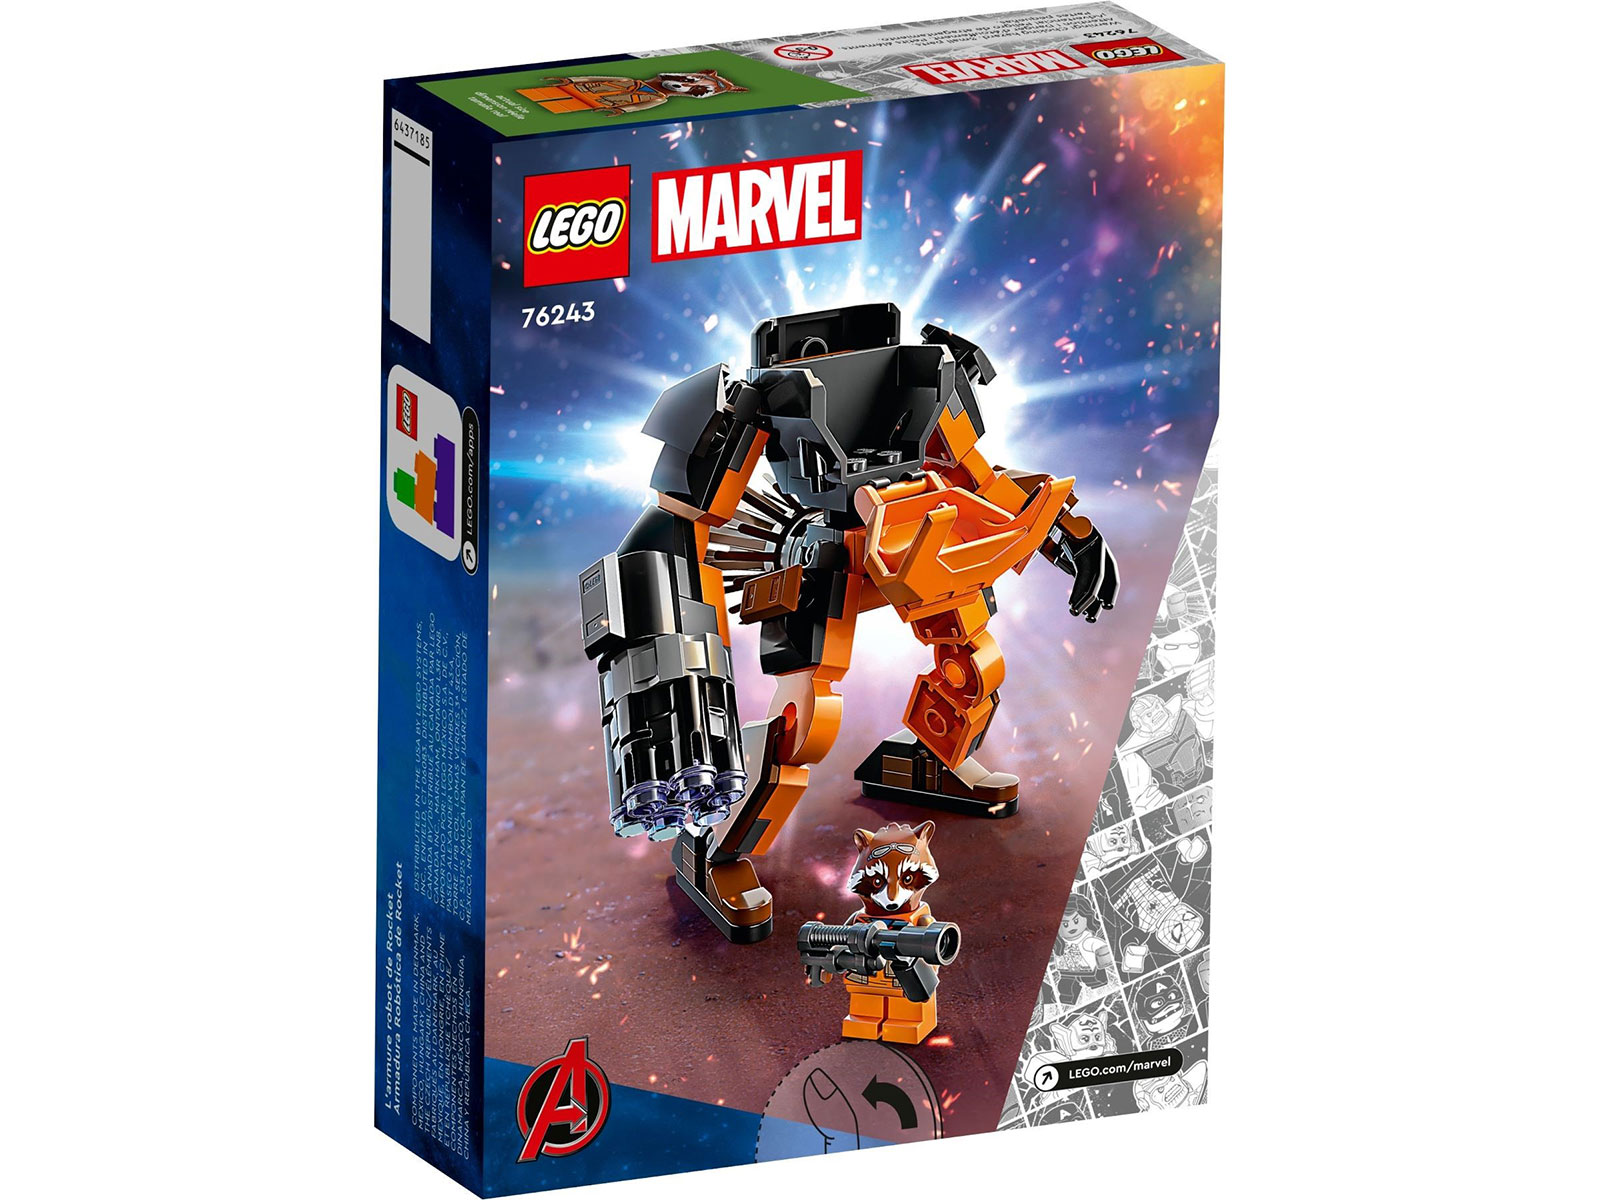 LEGO® Marvel 76243 - Rocket Mech